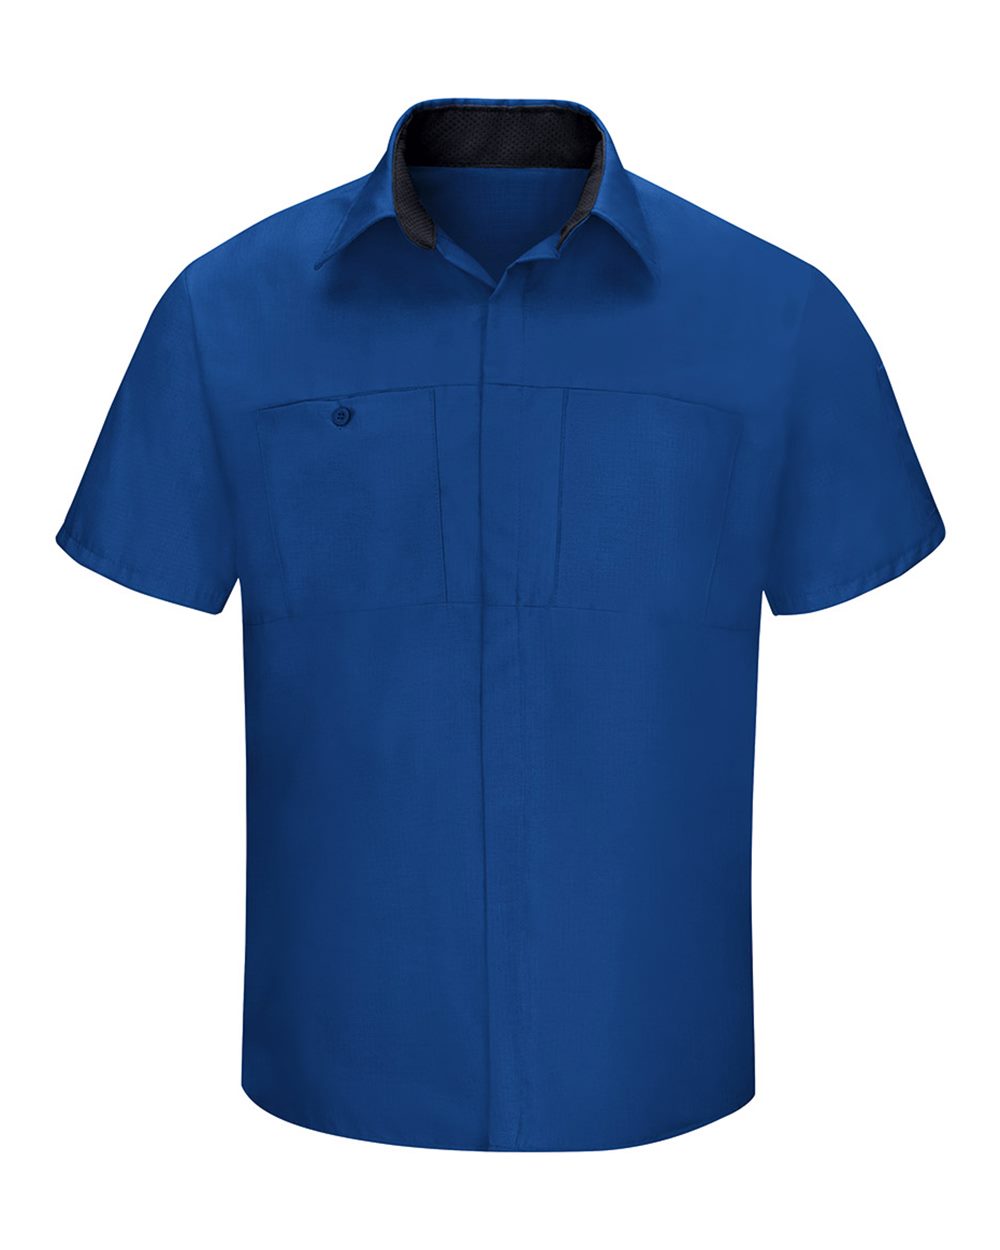 56530 Men\'s Performance Plus Short Sleeve Shop Shirt with Oilblok Technology - SY42  